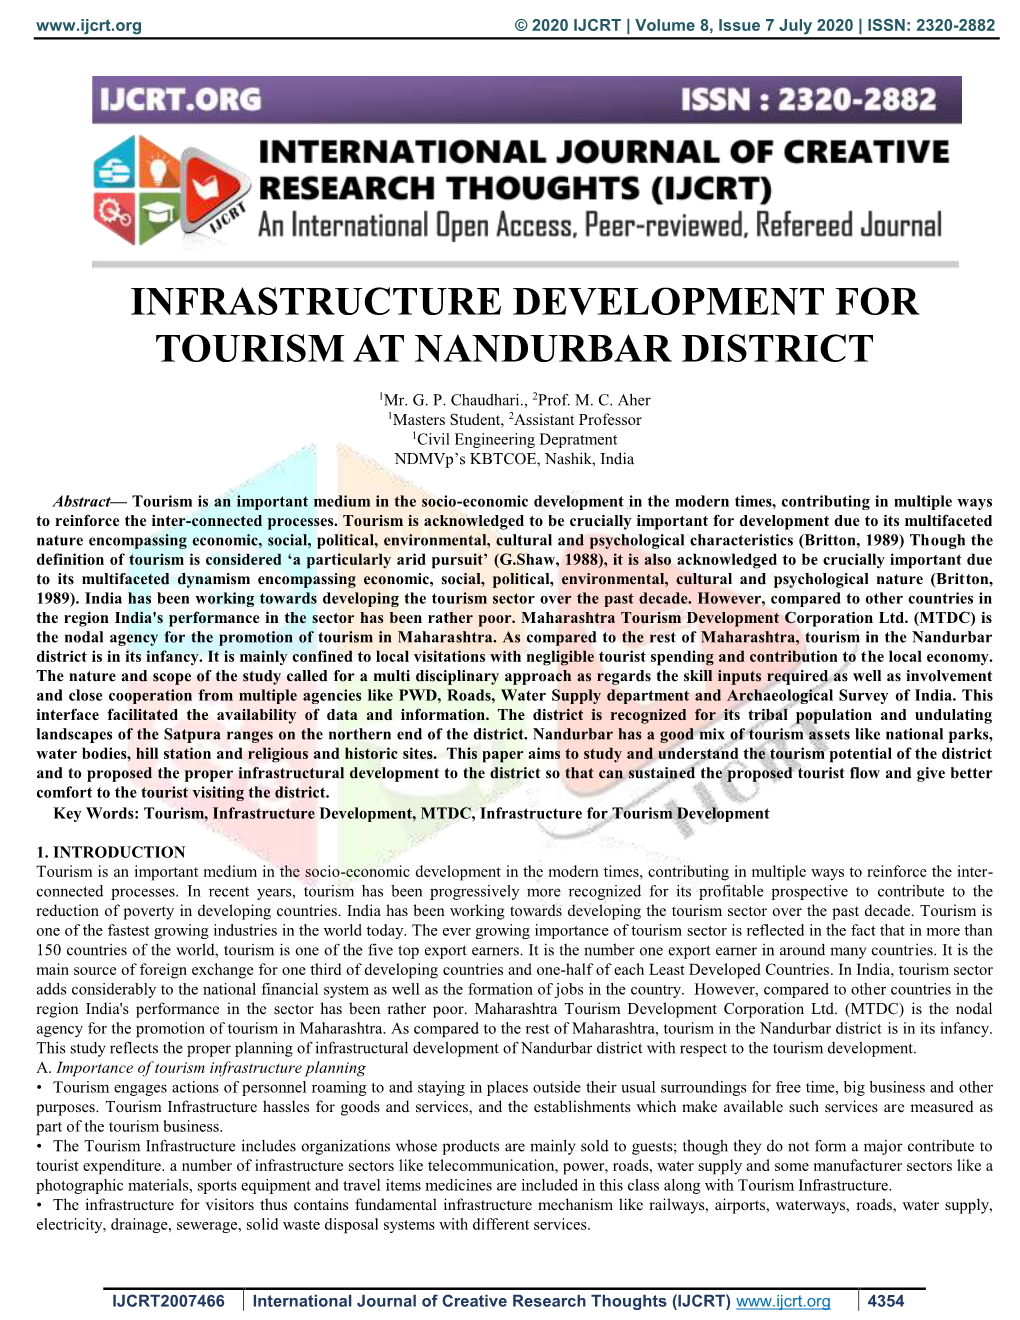 Infrastructure Development for Tourism at Nandurbar District